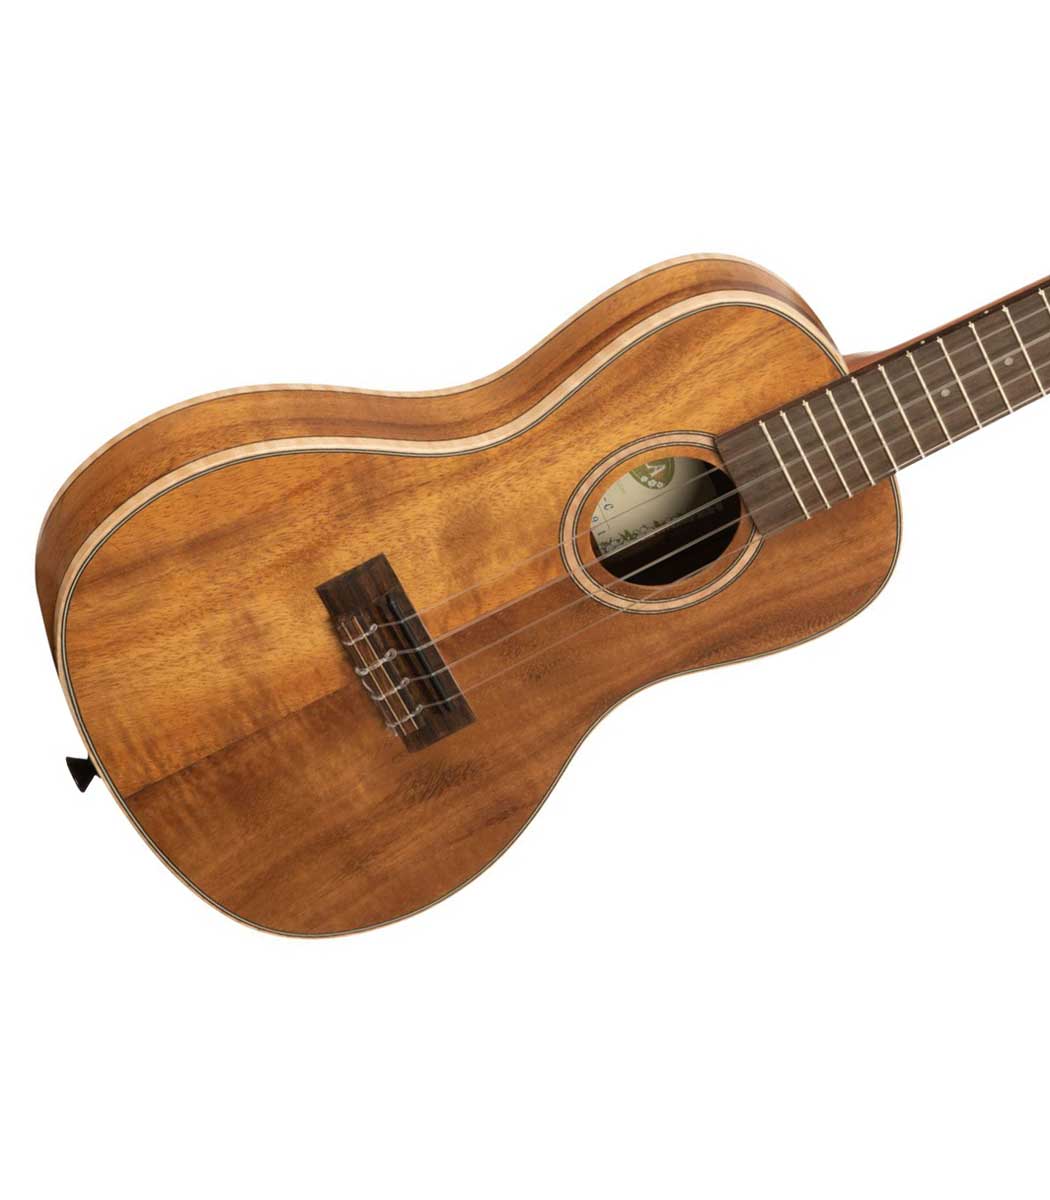 KA-KTU-C Concert Koa Travel Series The clear, crisp sound of Koa wood ukulele